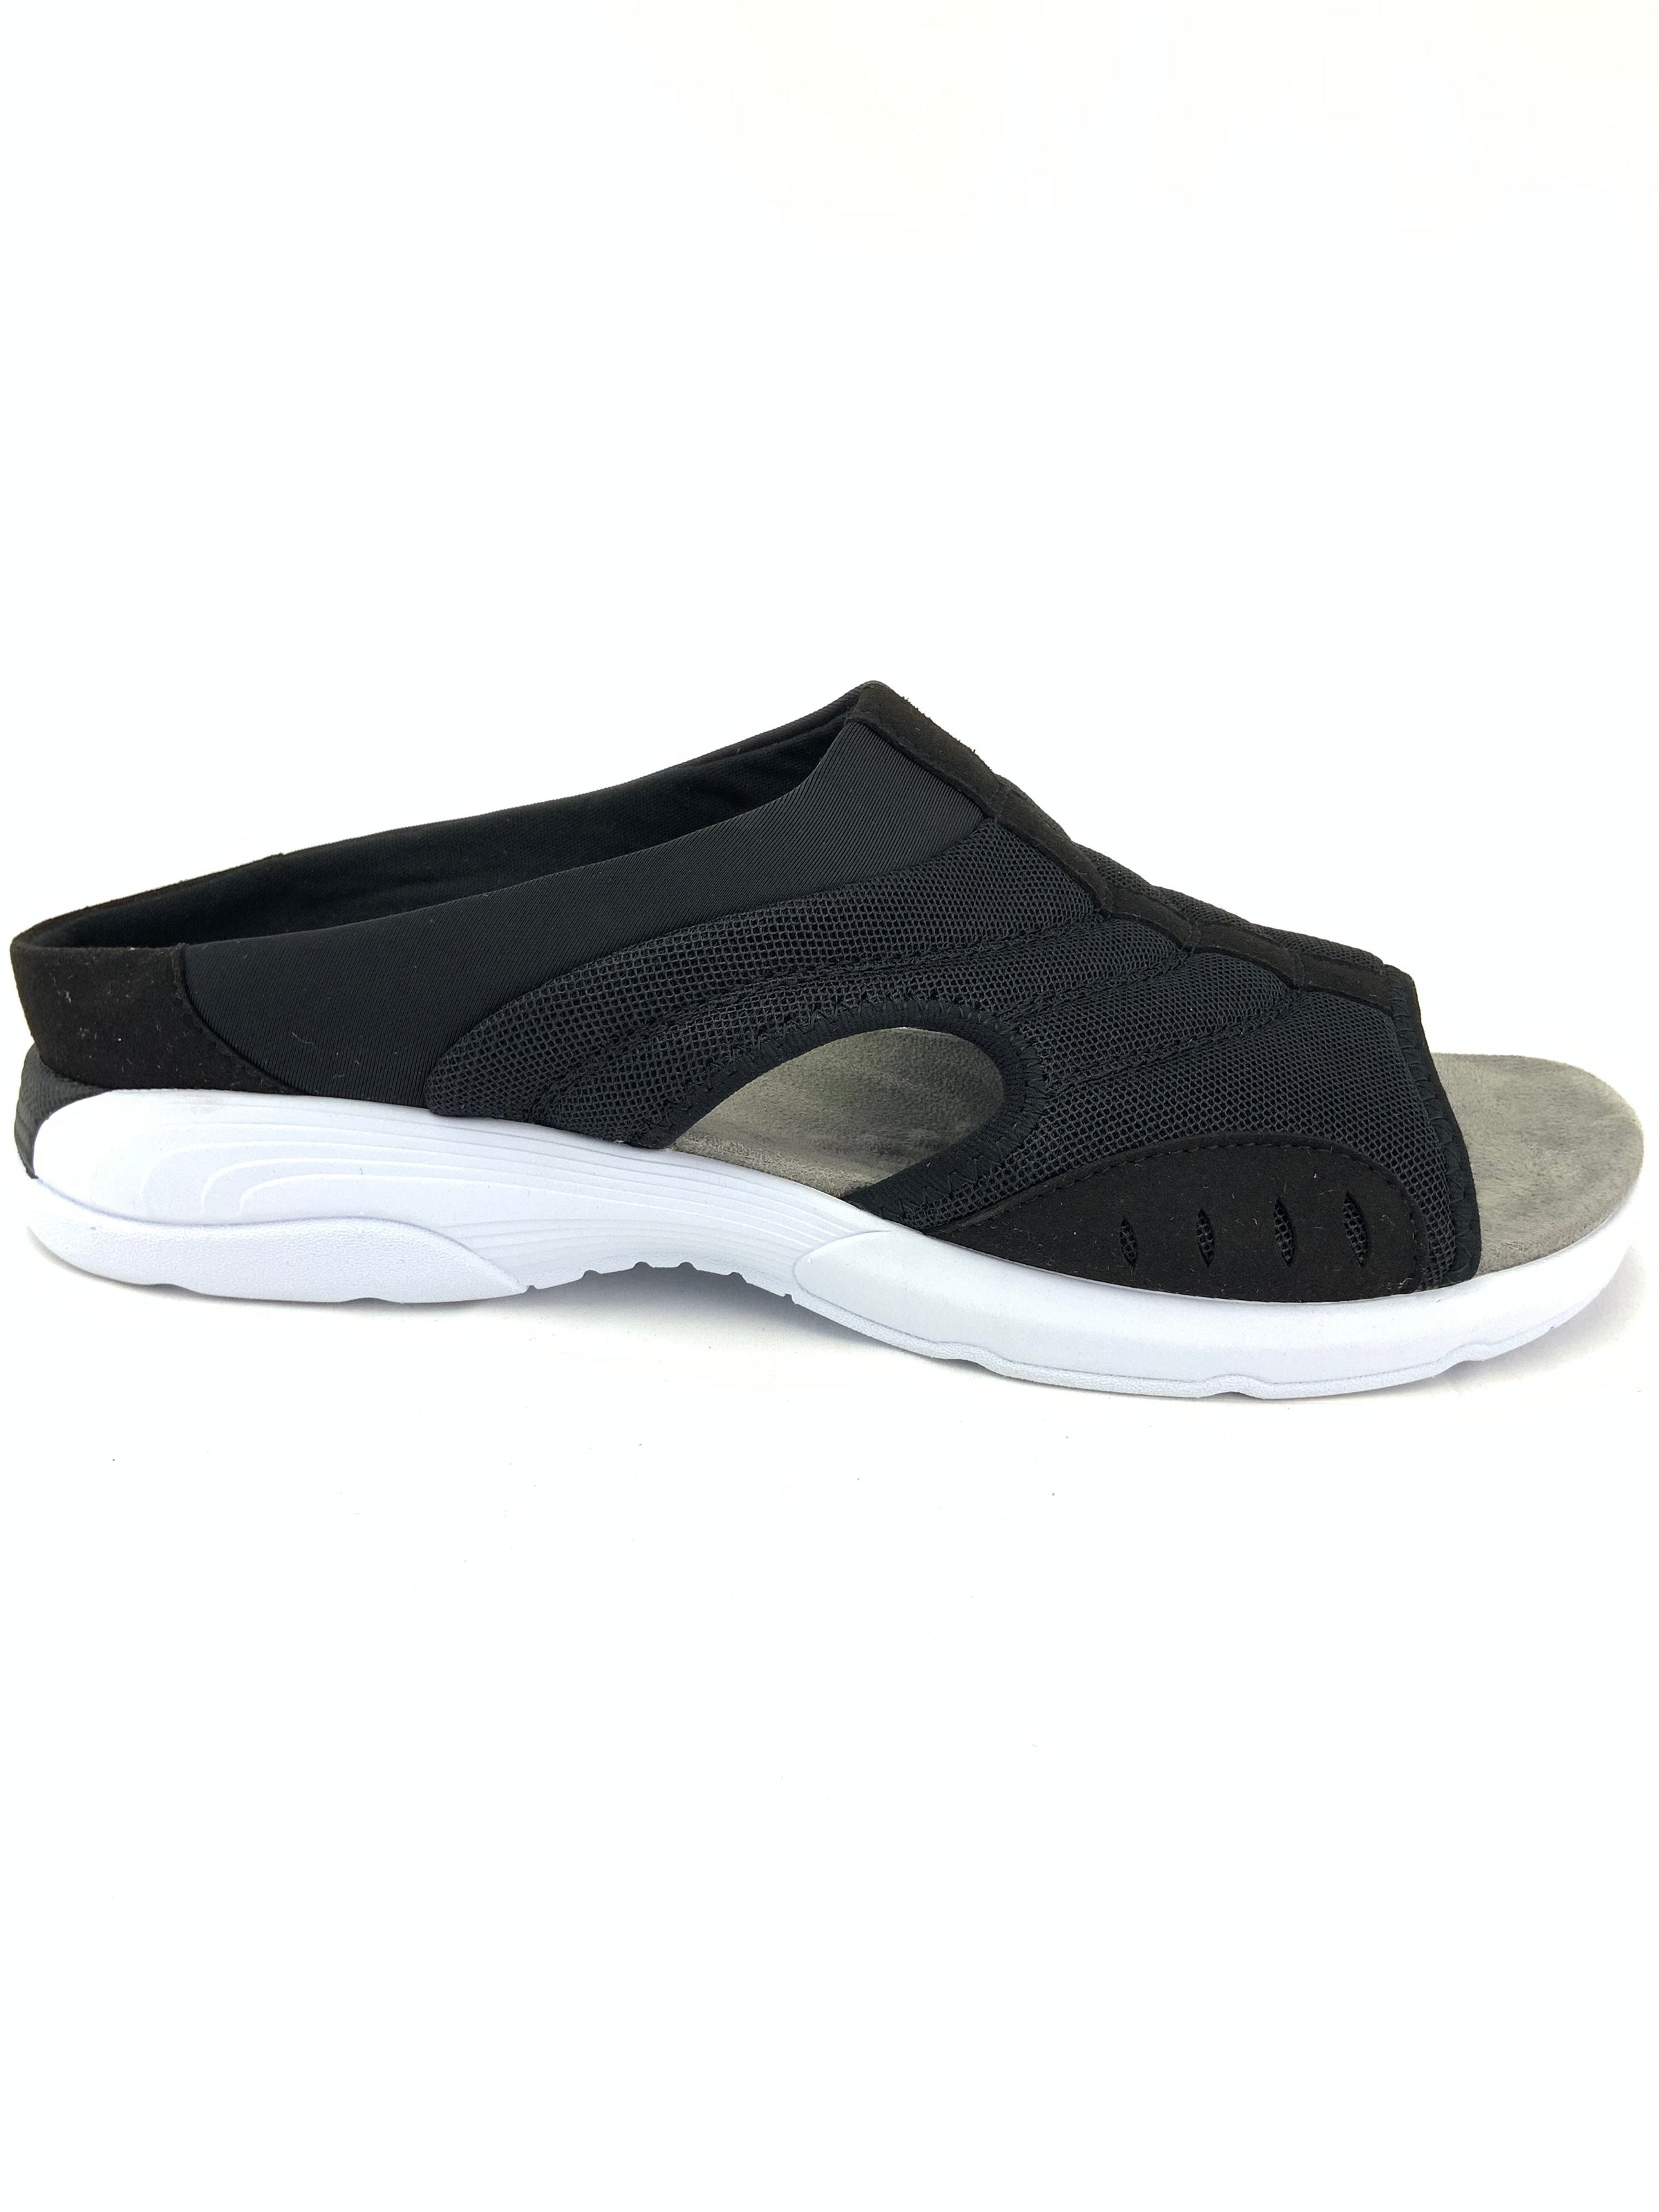 Easy Spirit Setraciee Sandals Size 7.5N